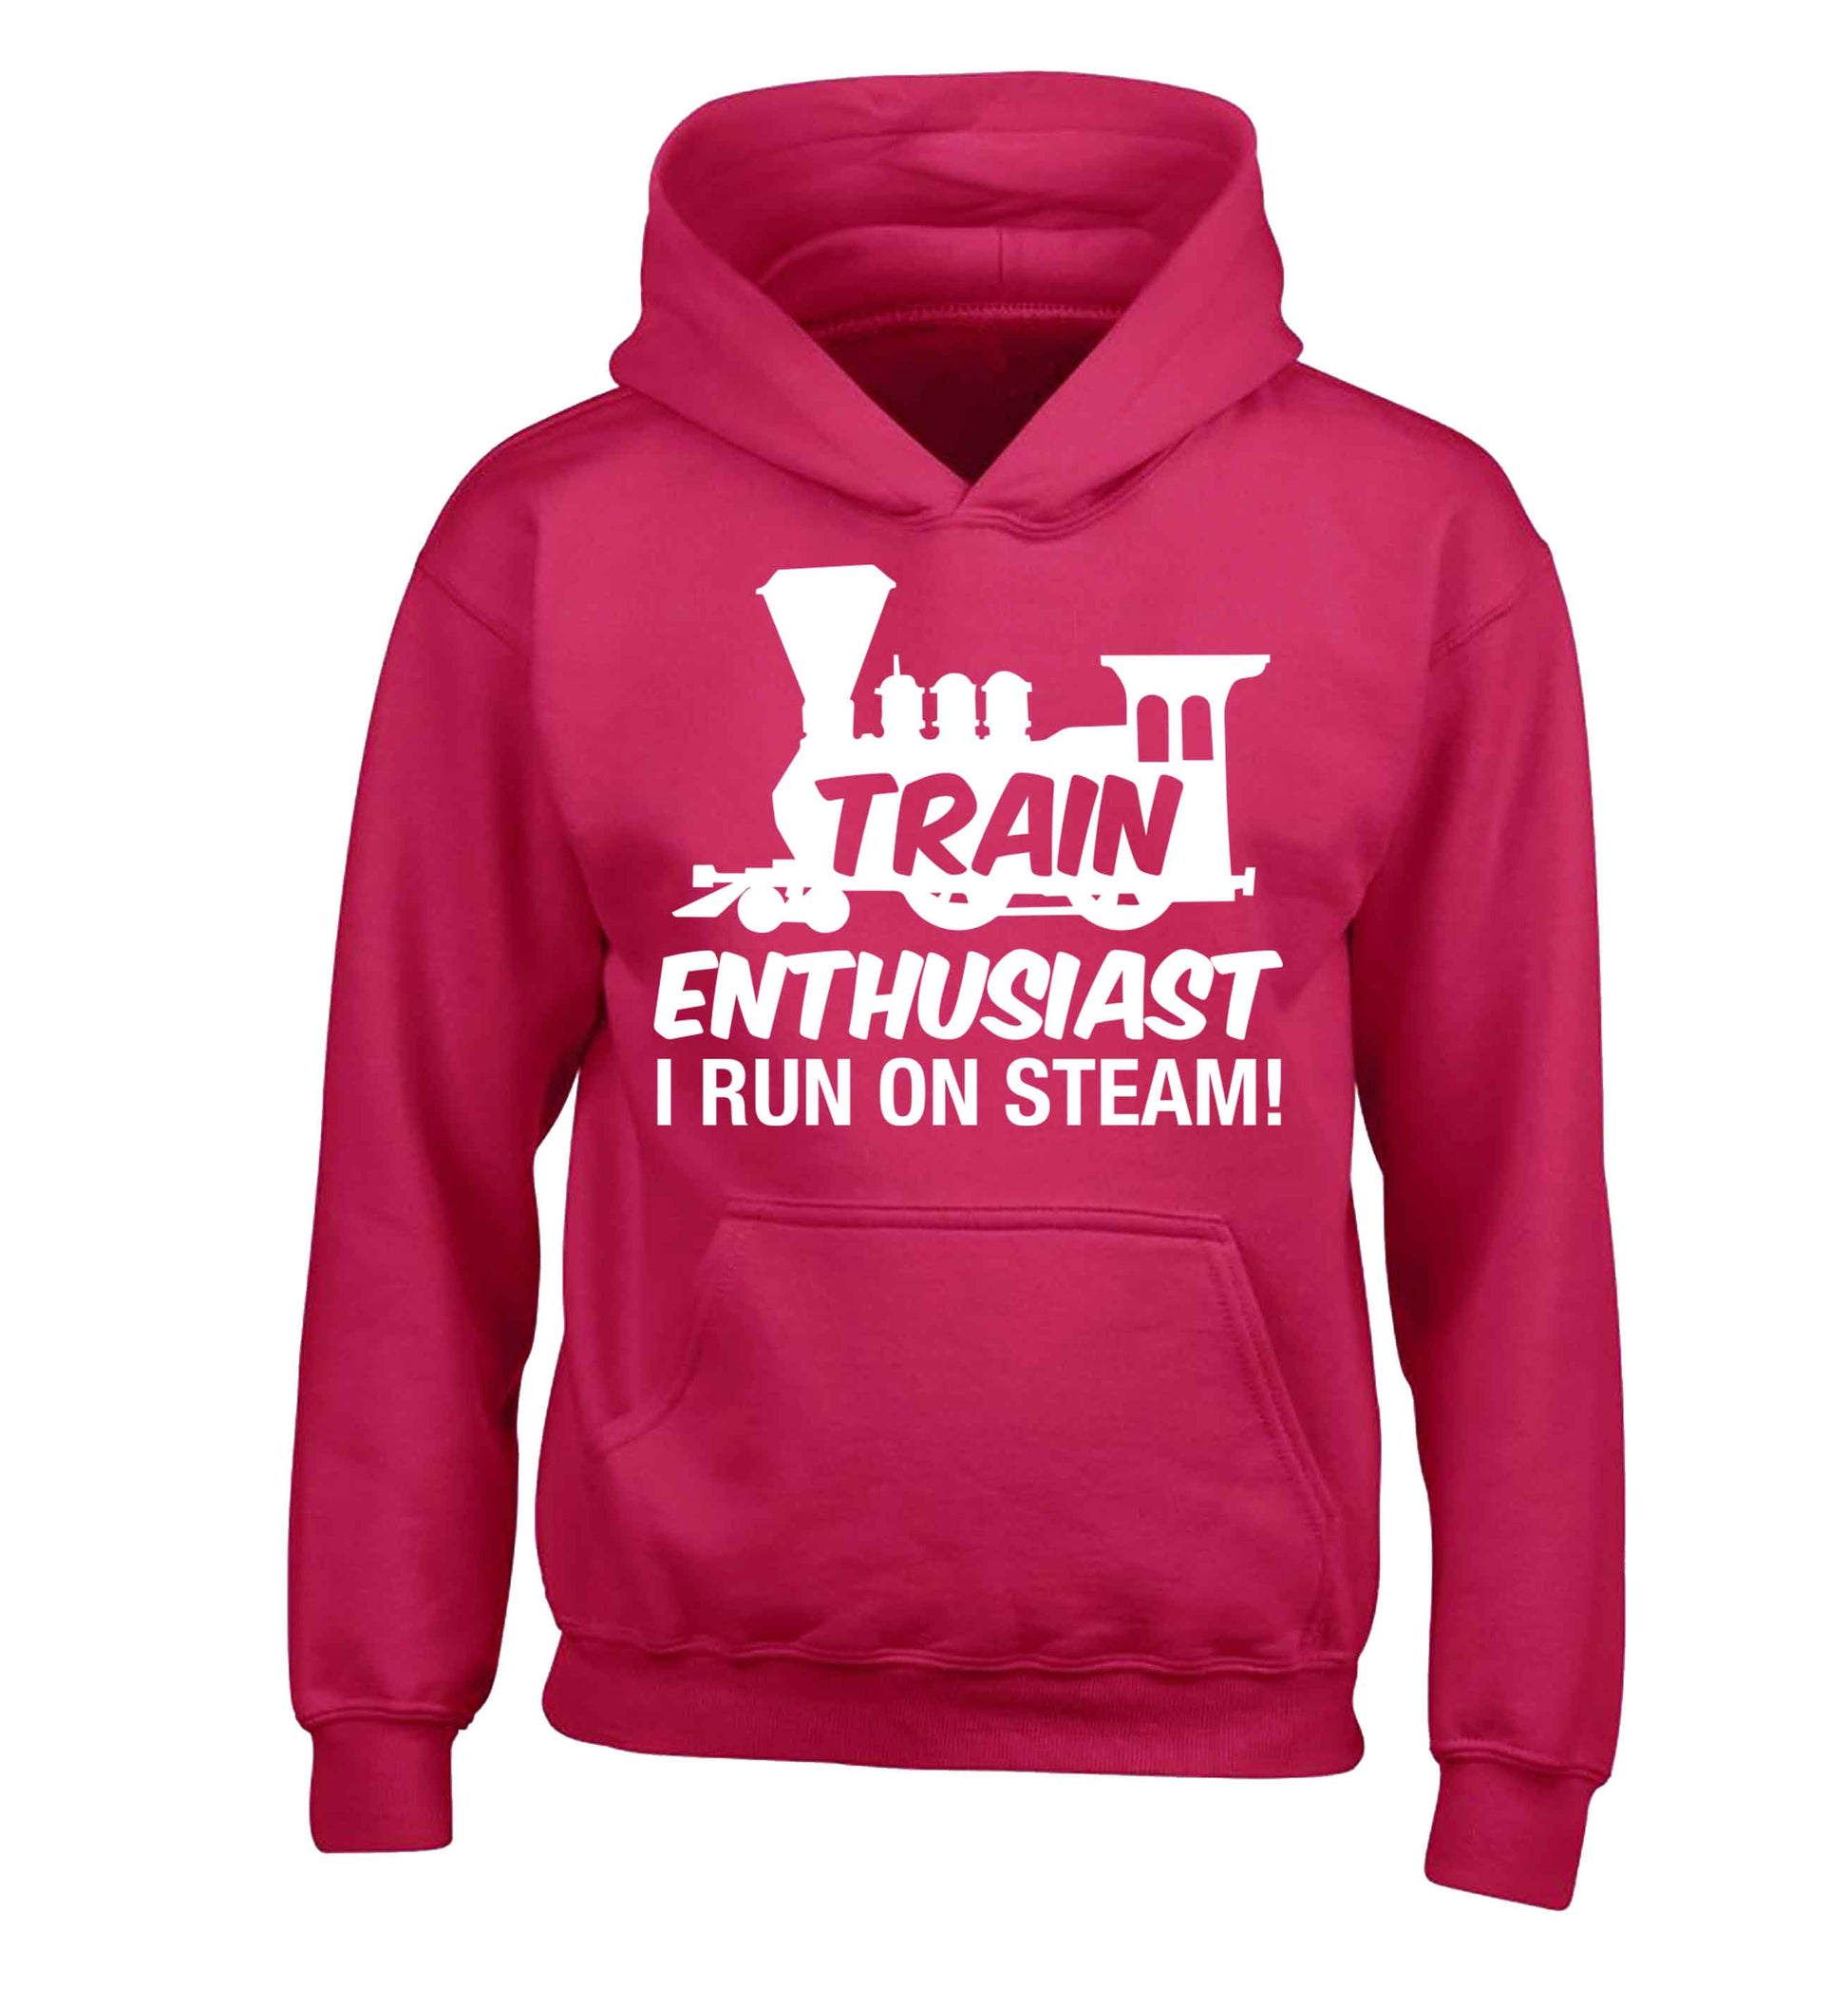 Train enthusiast I run on steam children's pink hoodie 12-13 Years